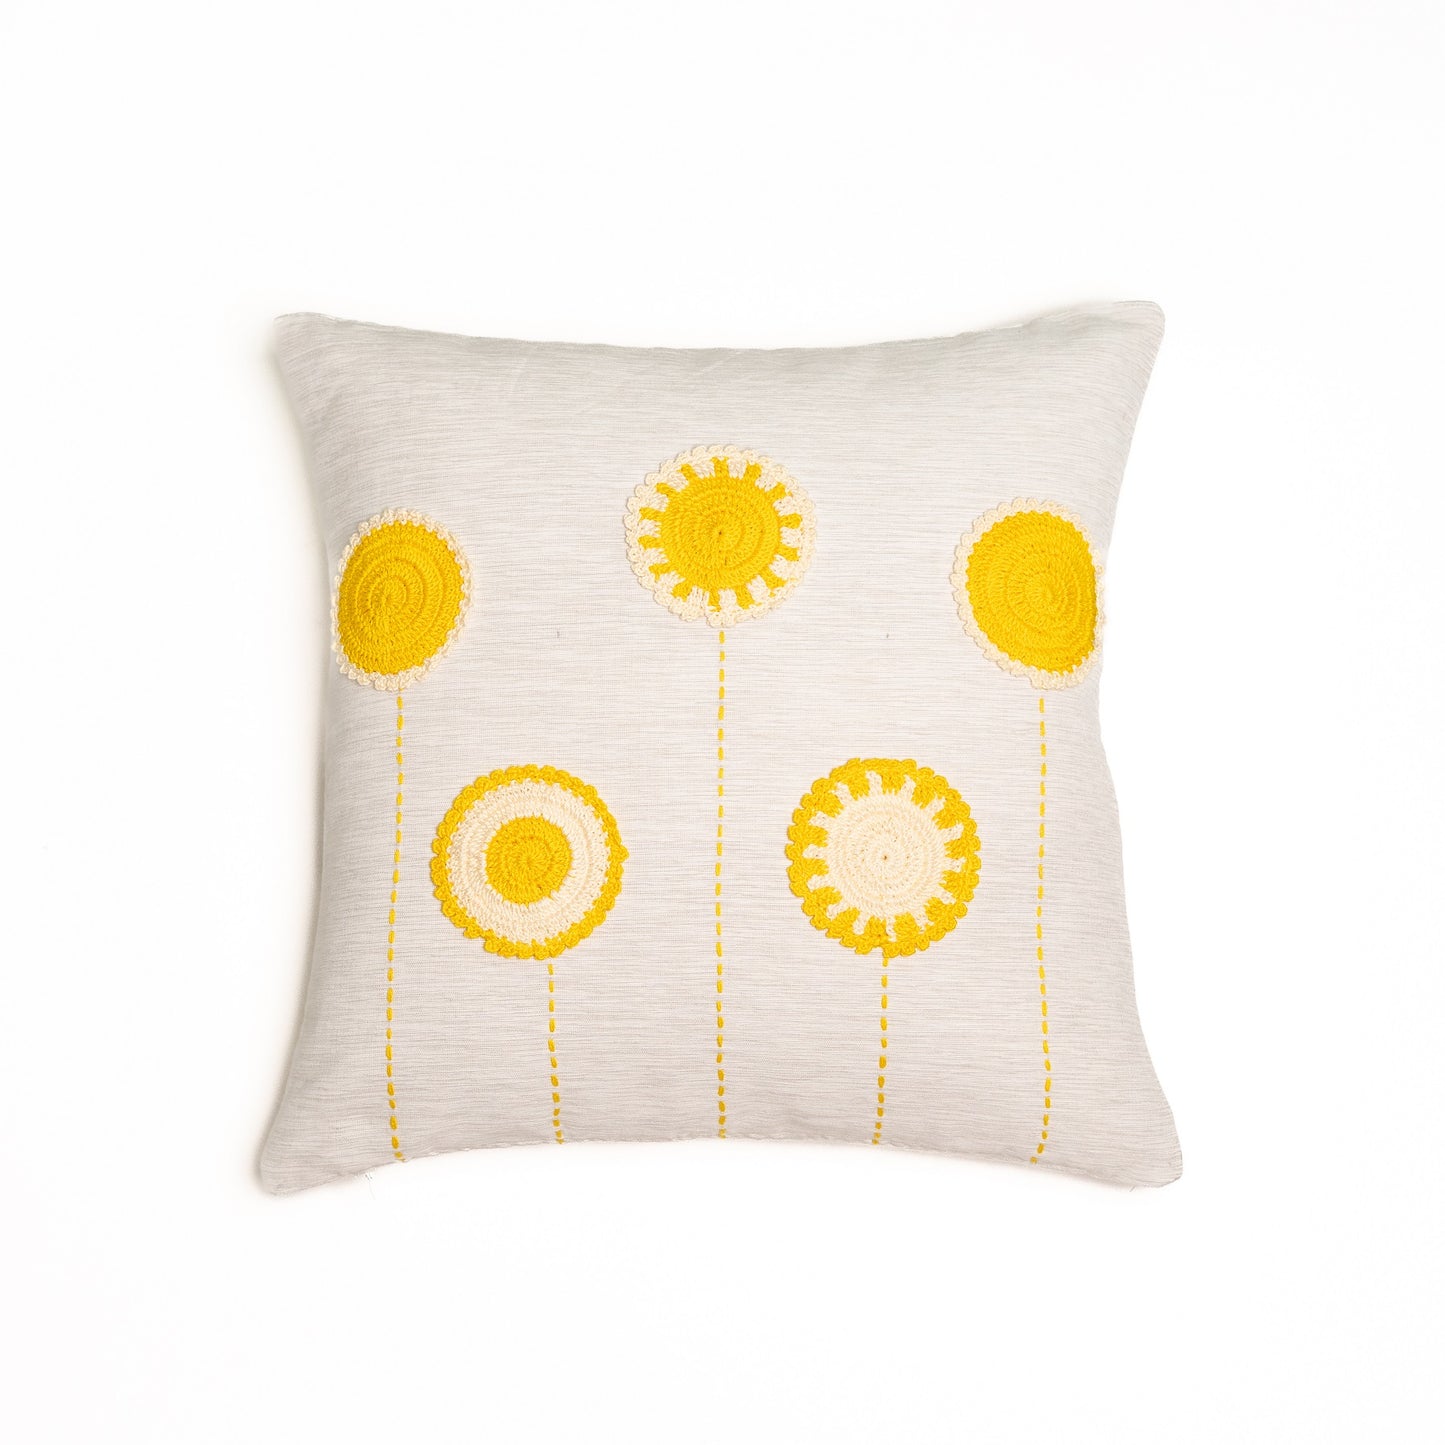 Crochet circles cushion cover (Yellow) - Ivory